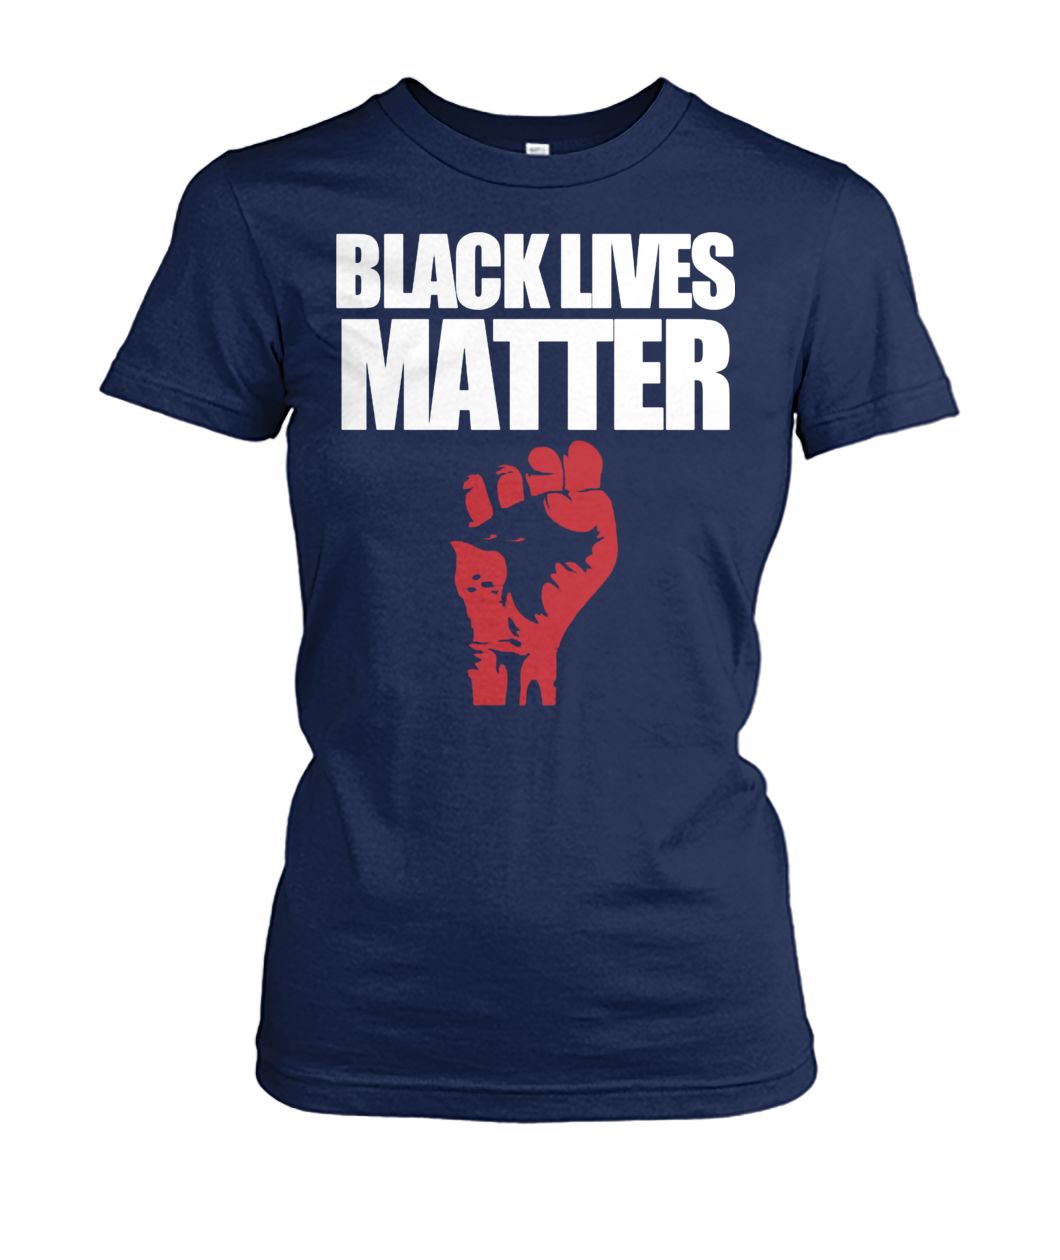 Black lives matter revolution movement women's crew tee